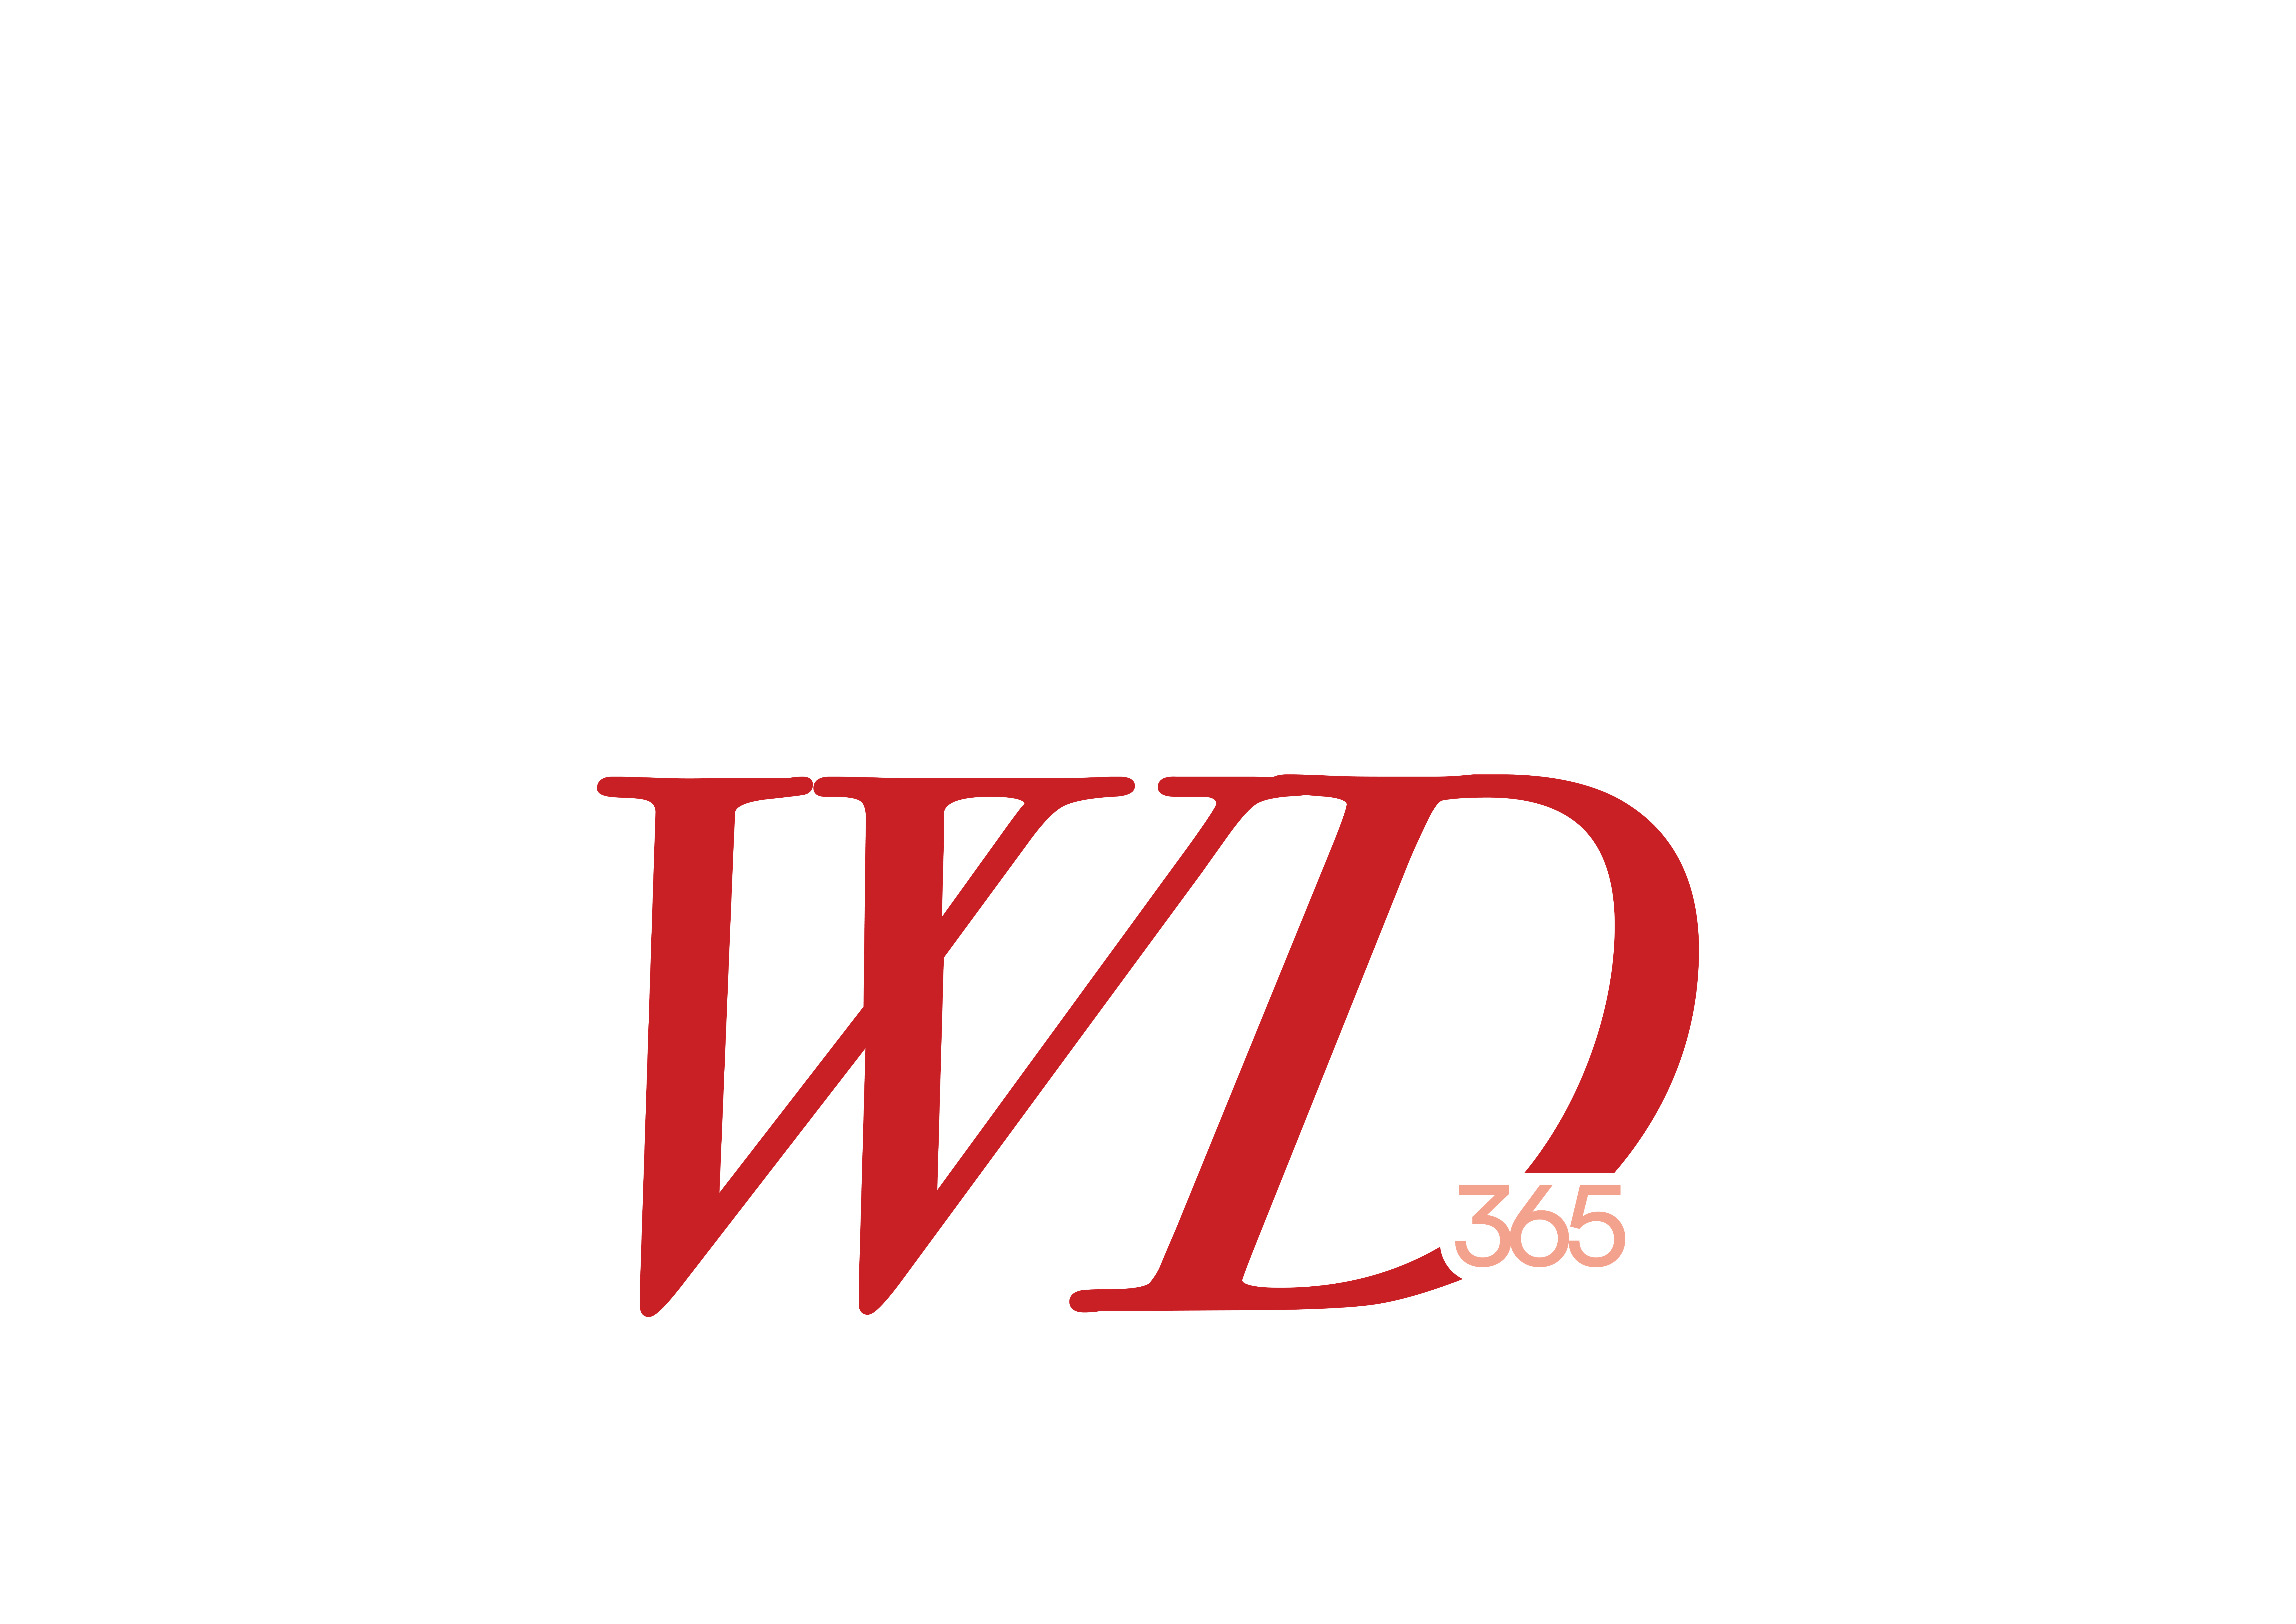 IRWD365